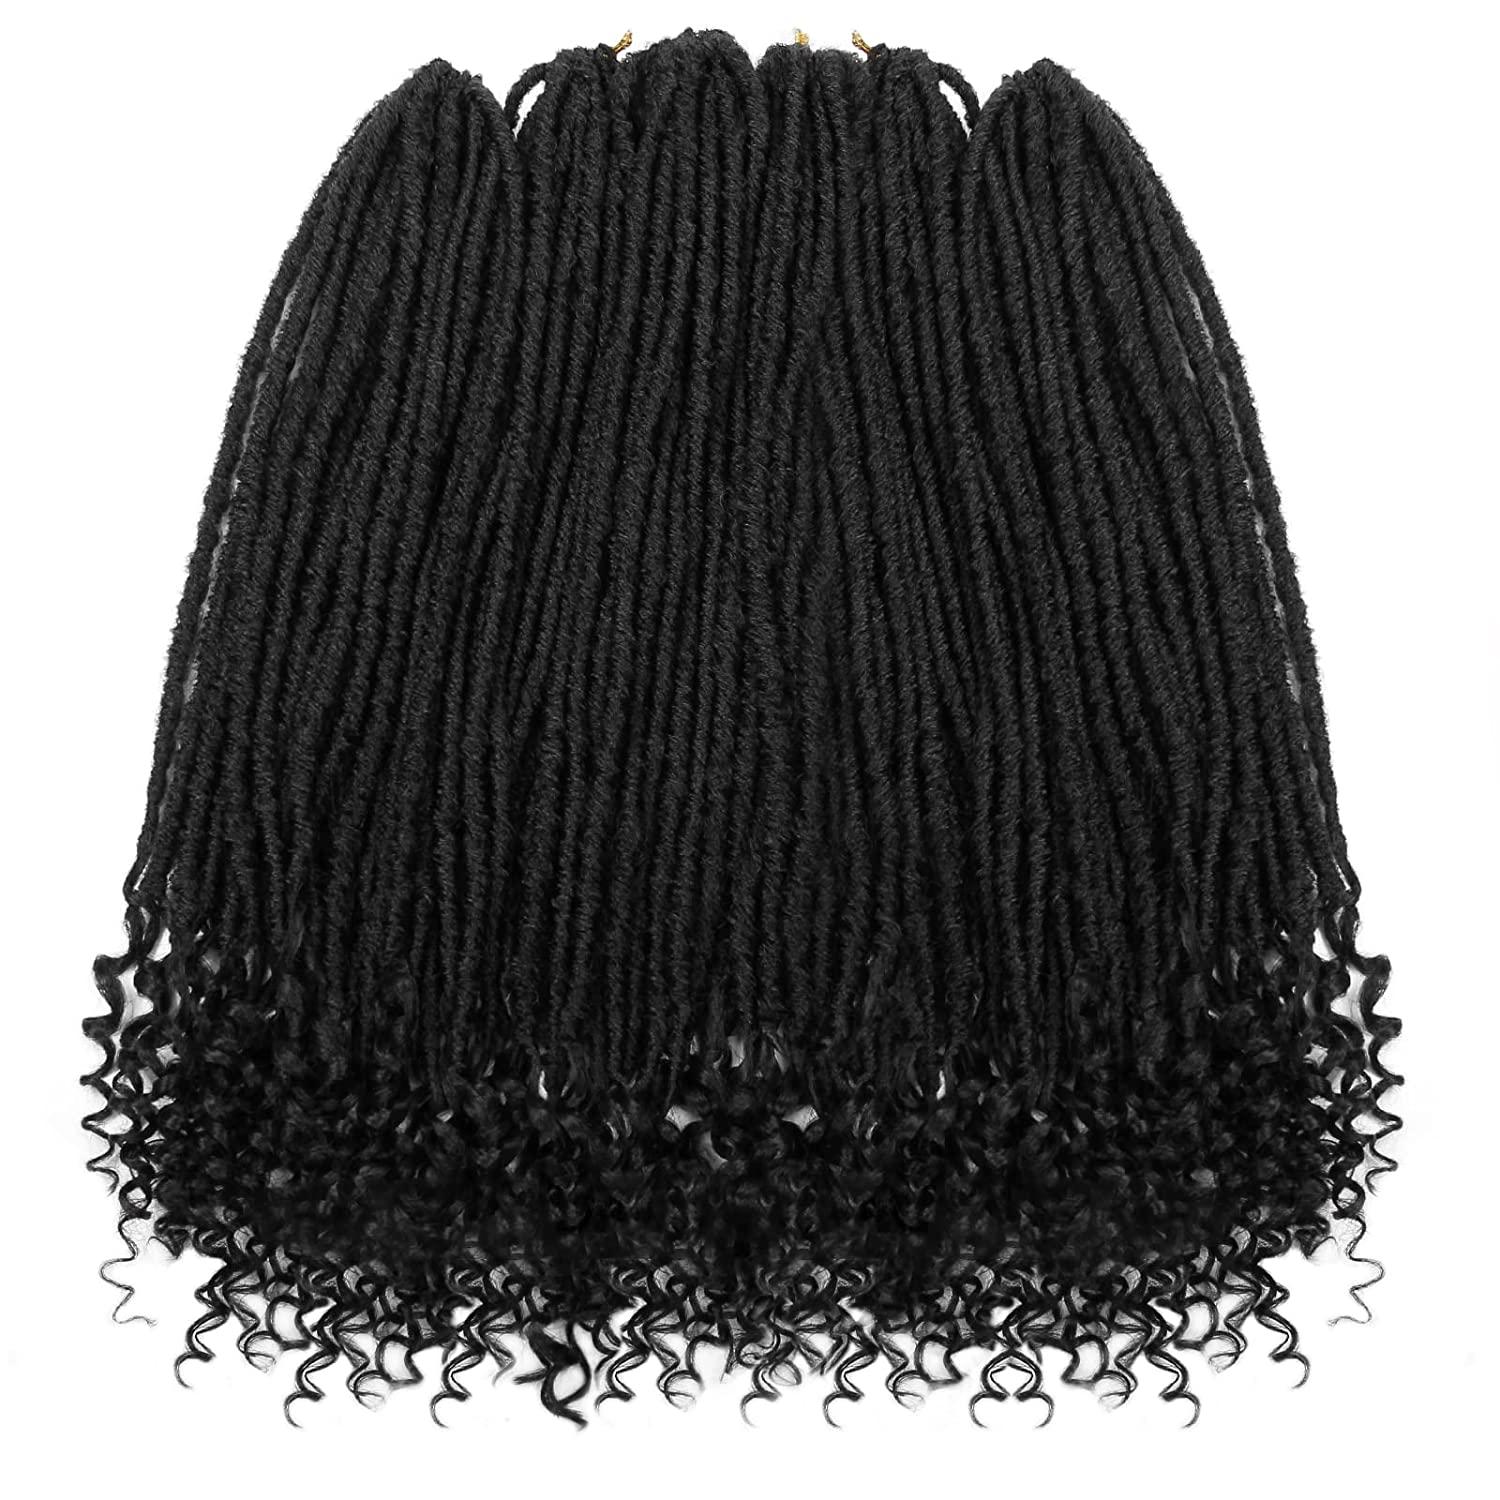 Goddess Faux Locs Crochet Hair 24inch Goddess Locs Crochet Hair Curly Ends 6packs Curly Faux